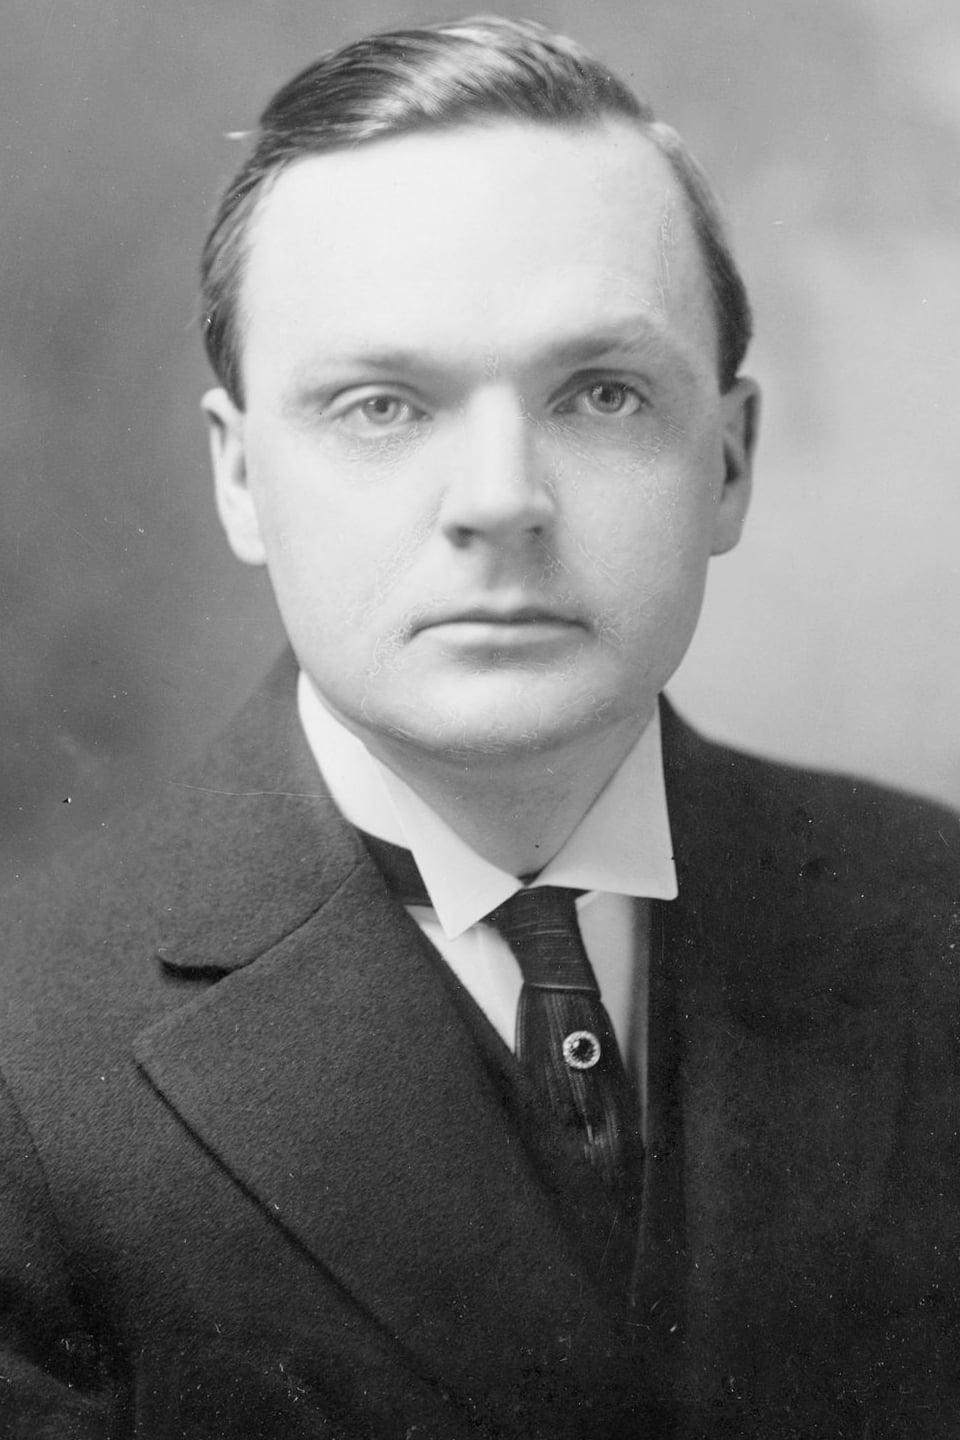 Dudley Field Malone | Winston Churchill (uncredited)